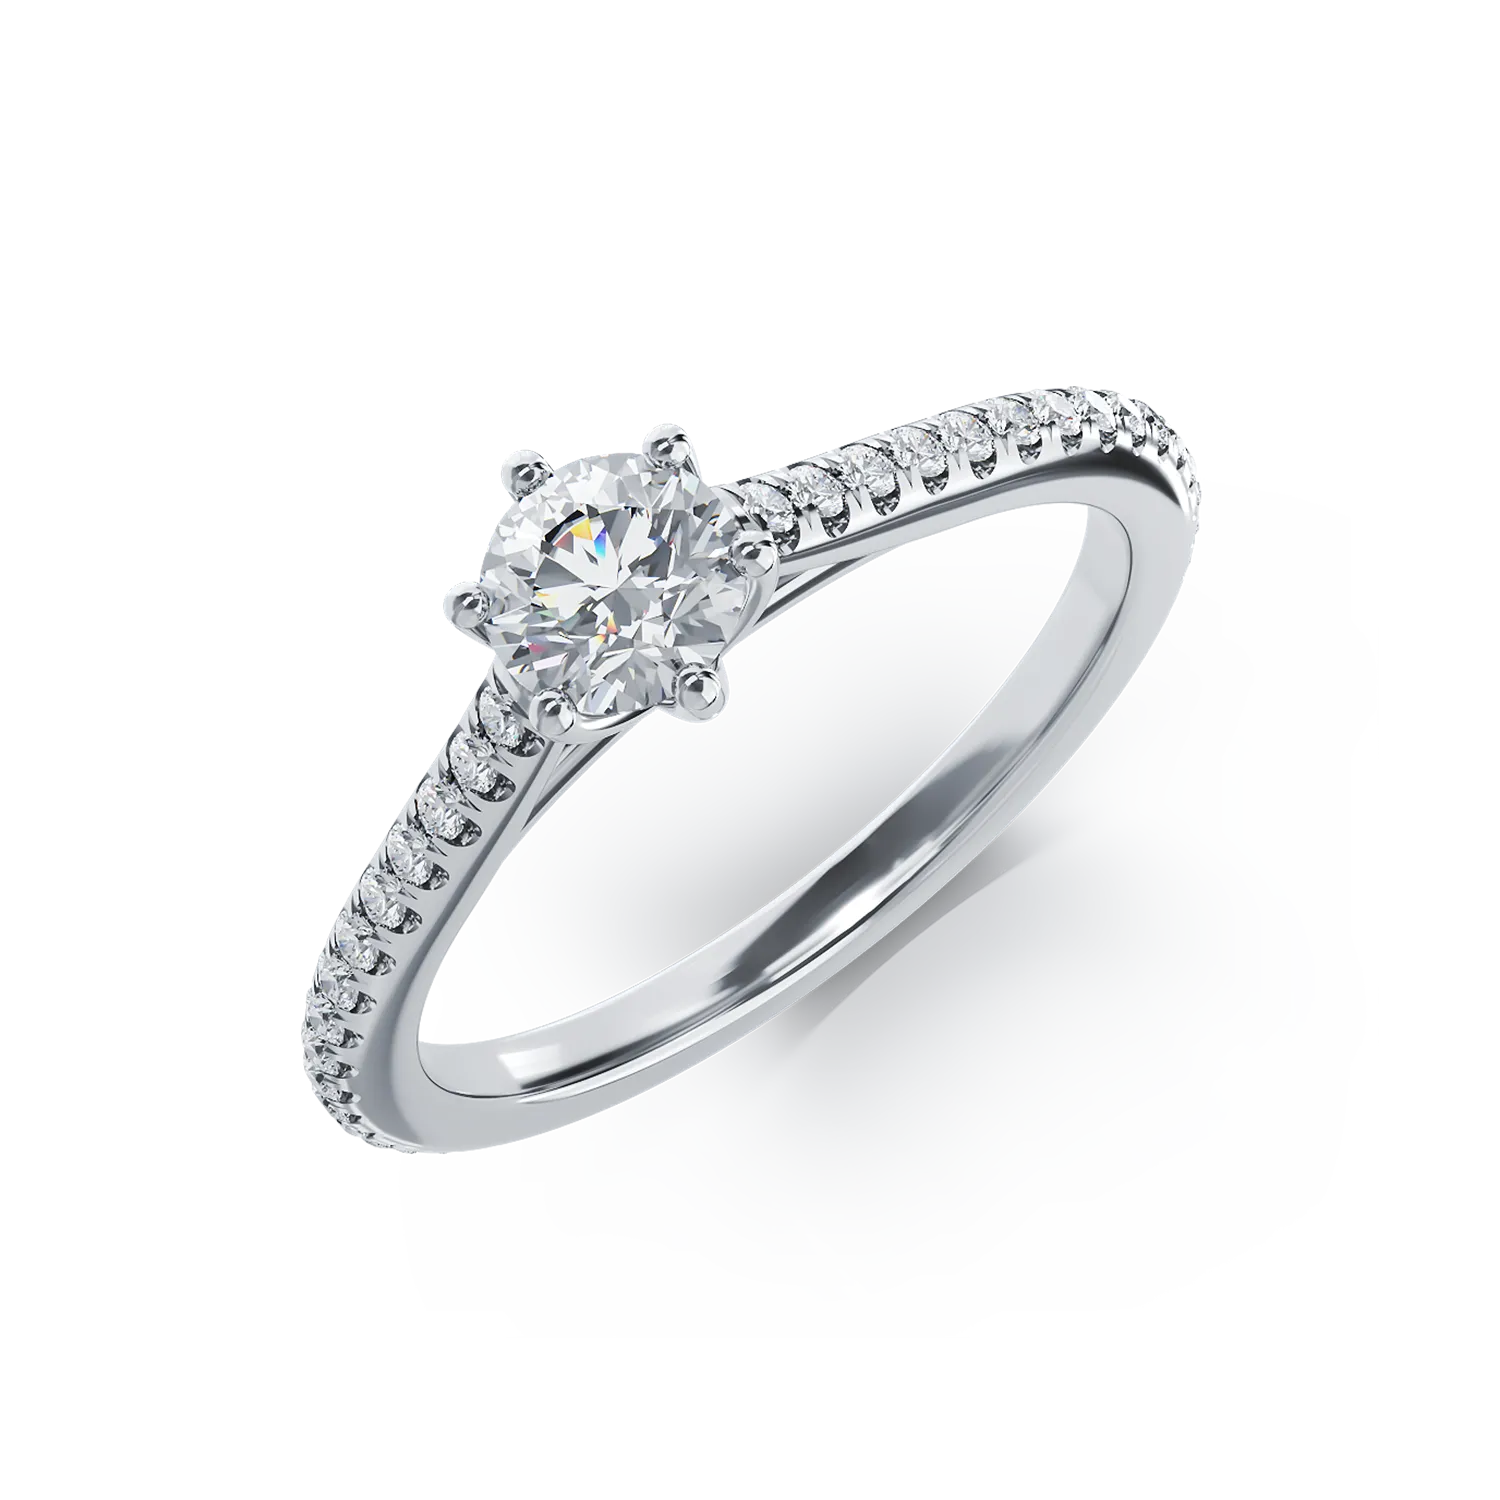 Platinum engagement ring with 0.4ct diamond and 0.19ct diamonds